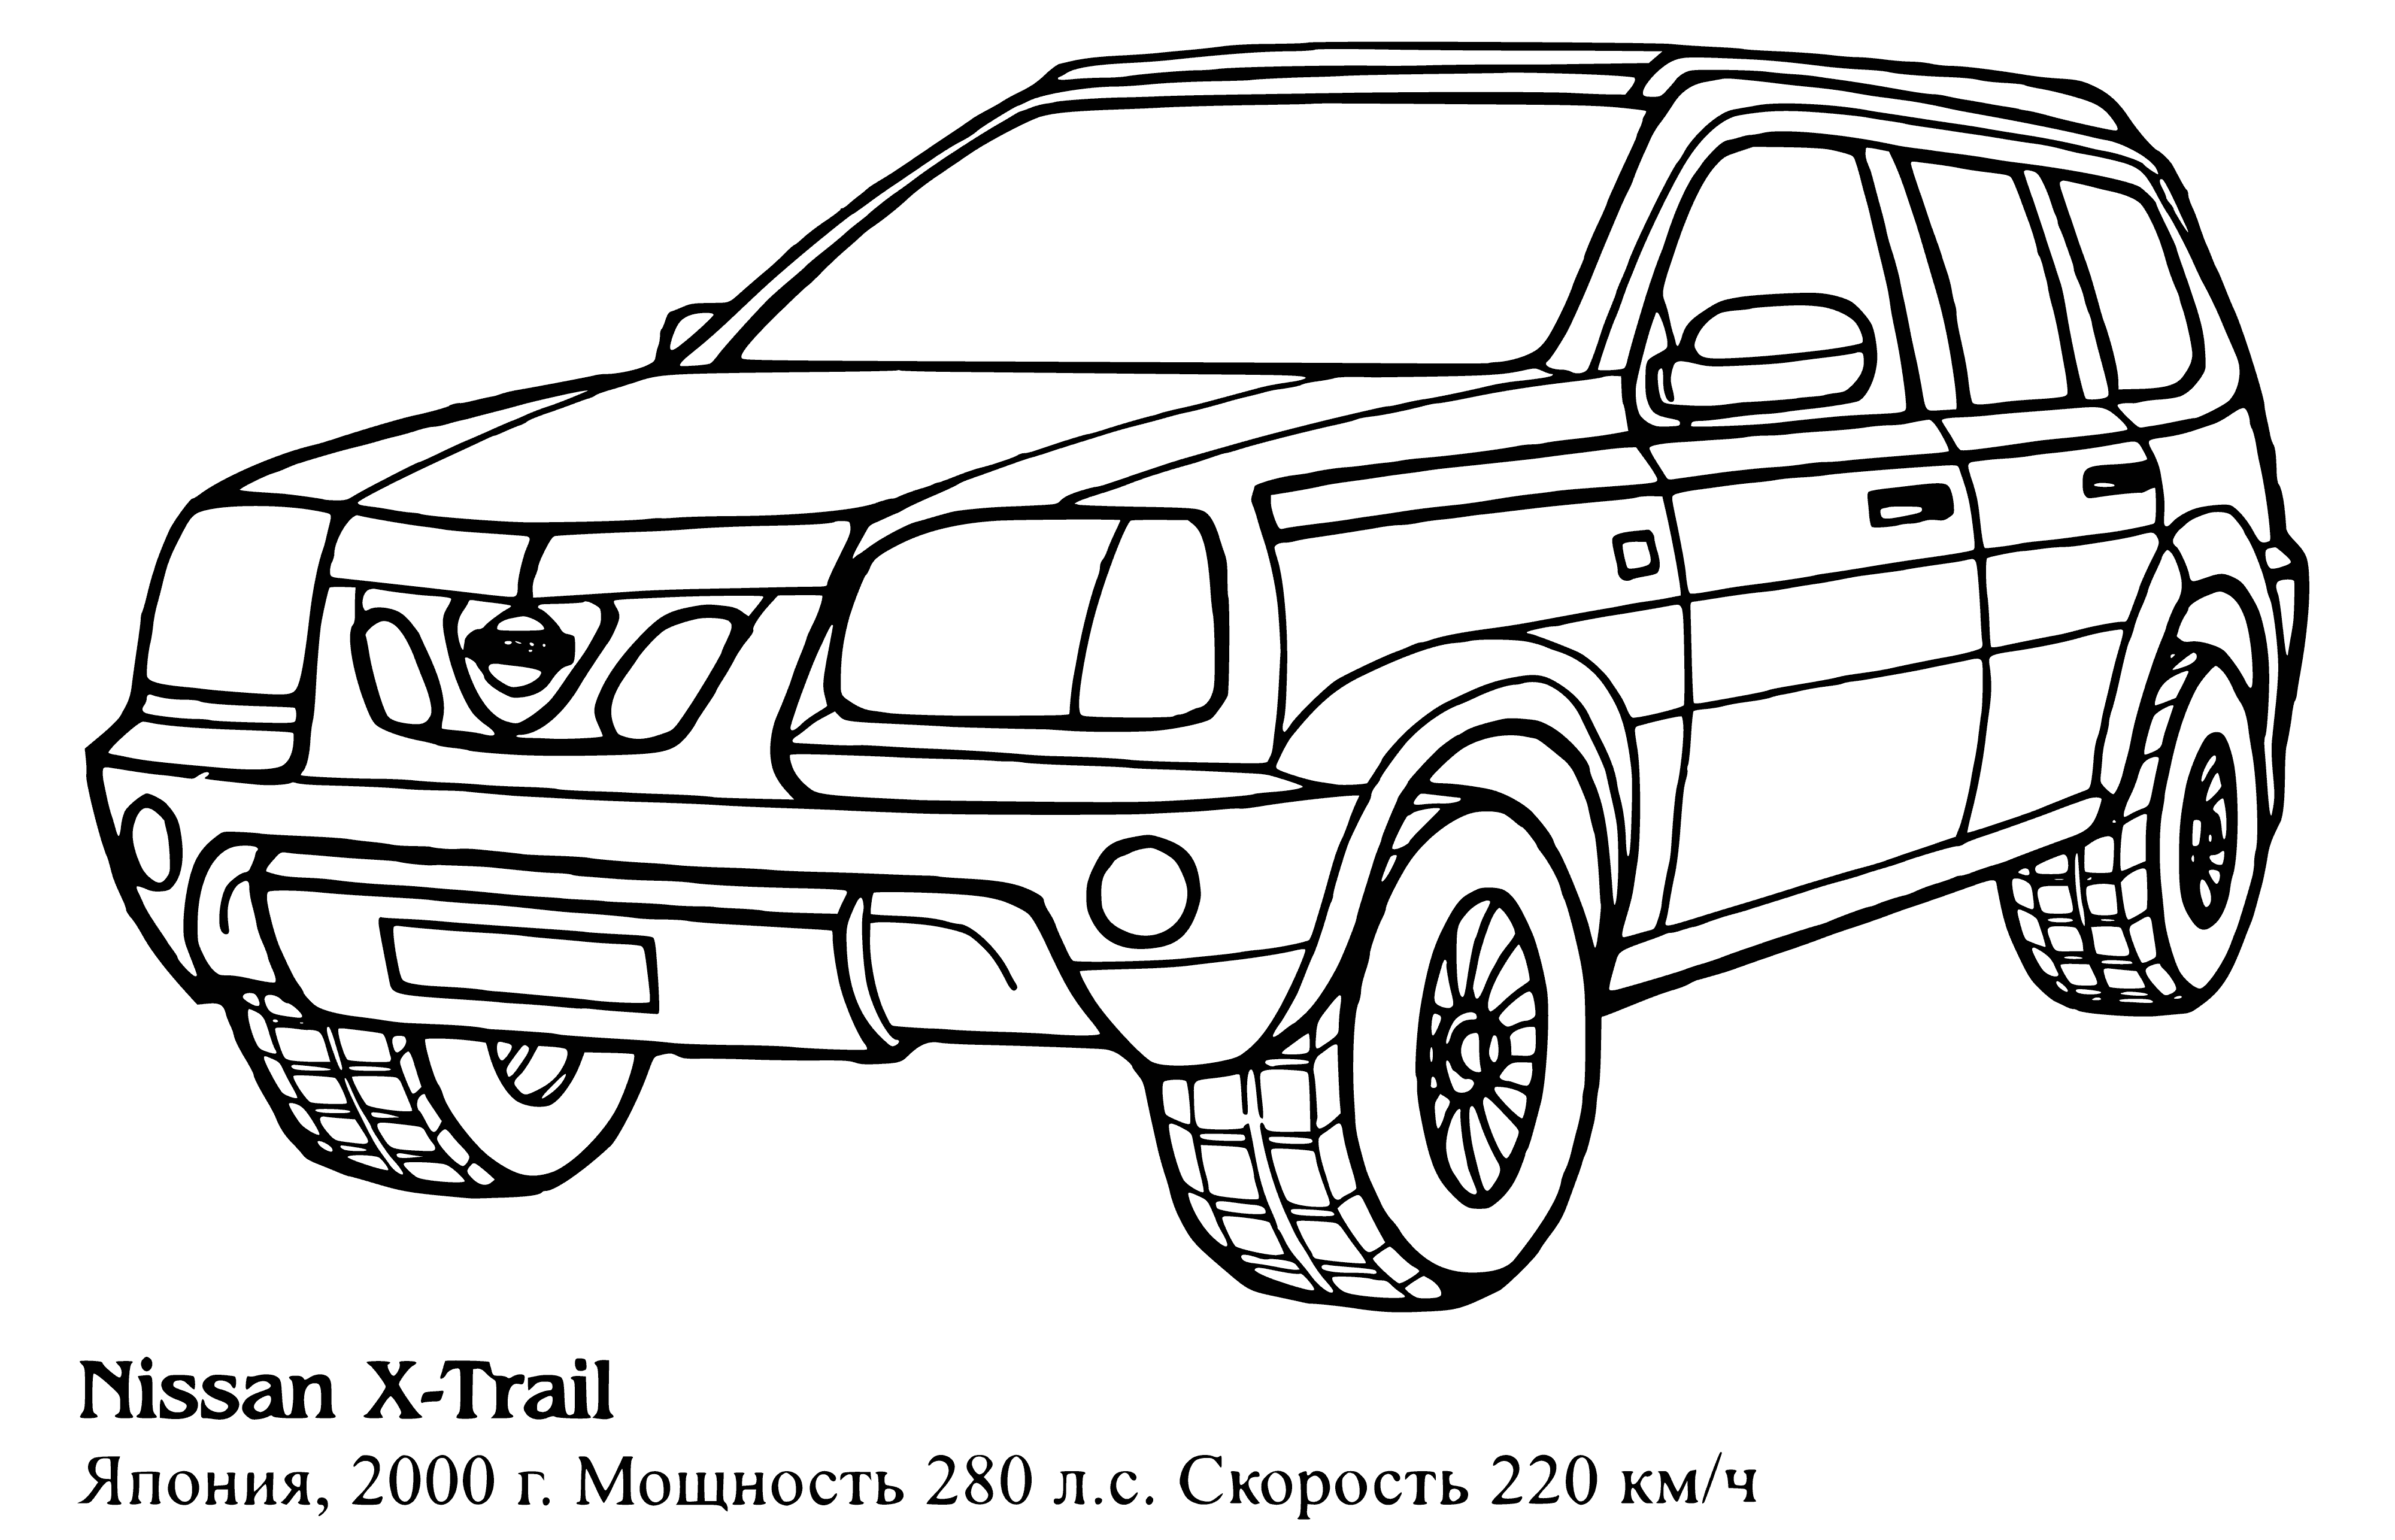 Nissan X-Trail kolorowanka